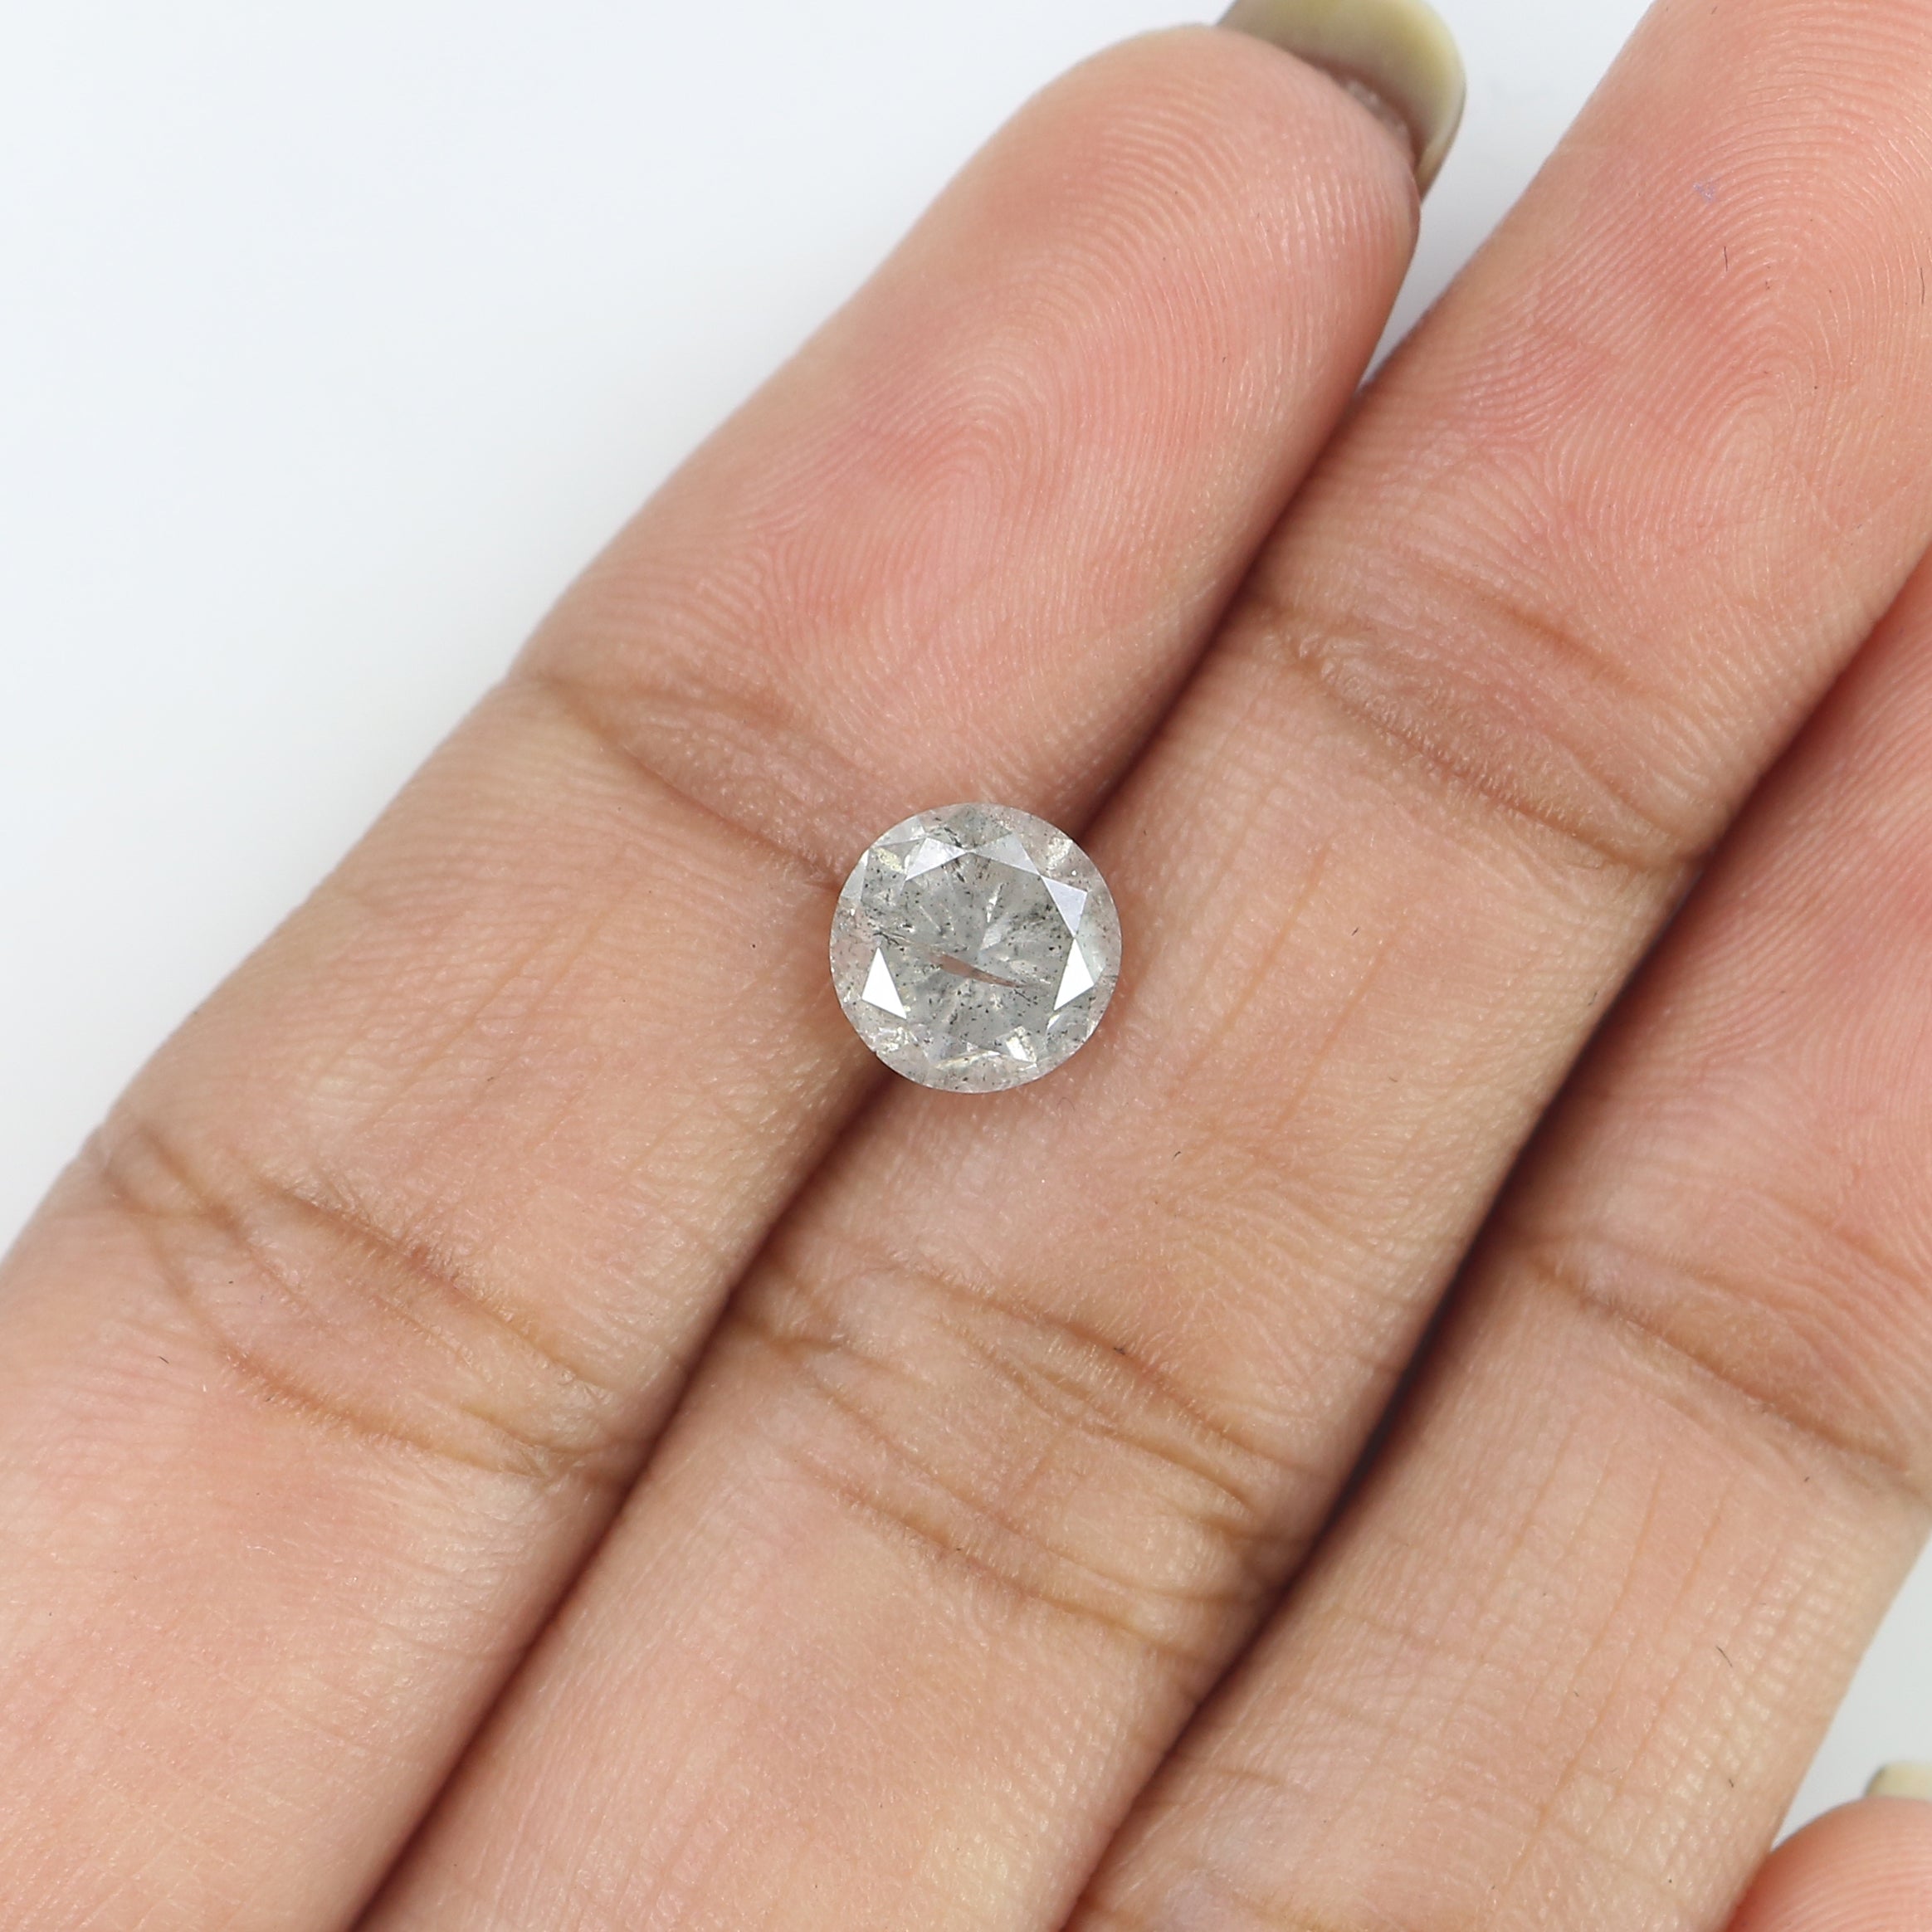 1.43 CT Natural Loose Round Shape Diamond Grey Color Round Cut Diamond 6.75 MM Natural Loose Diamond Round Brilliant Cut Diamond QL8207